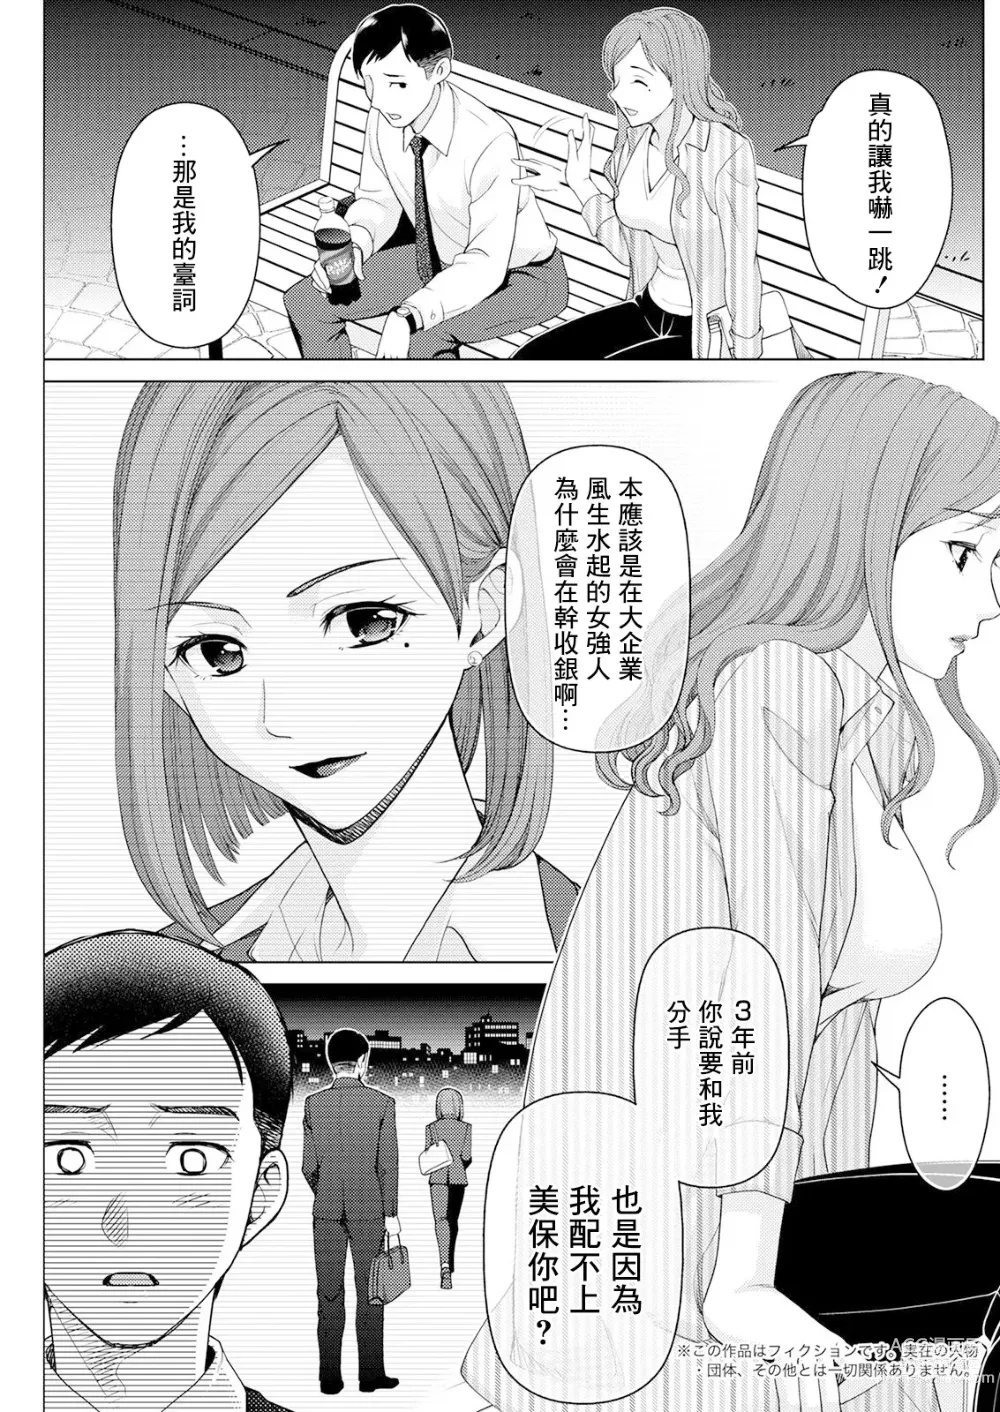 Page 3 of manga Kawari, Hateru.